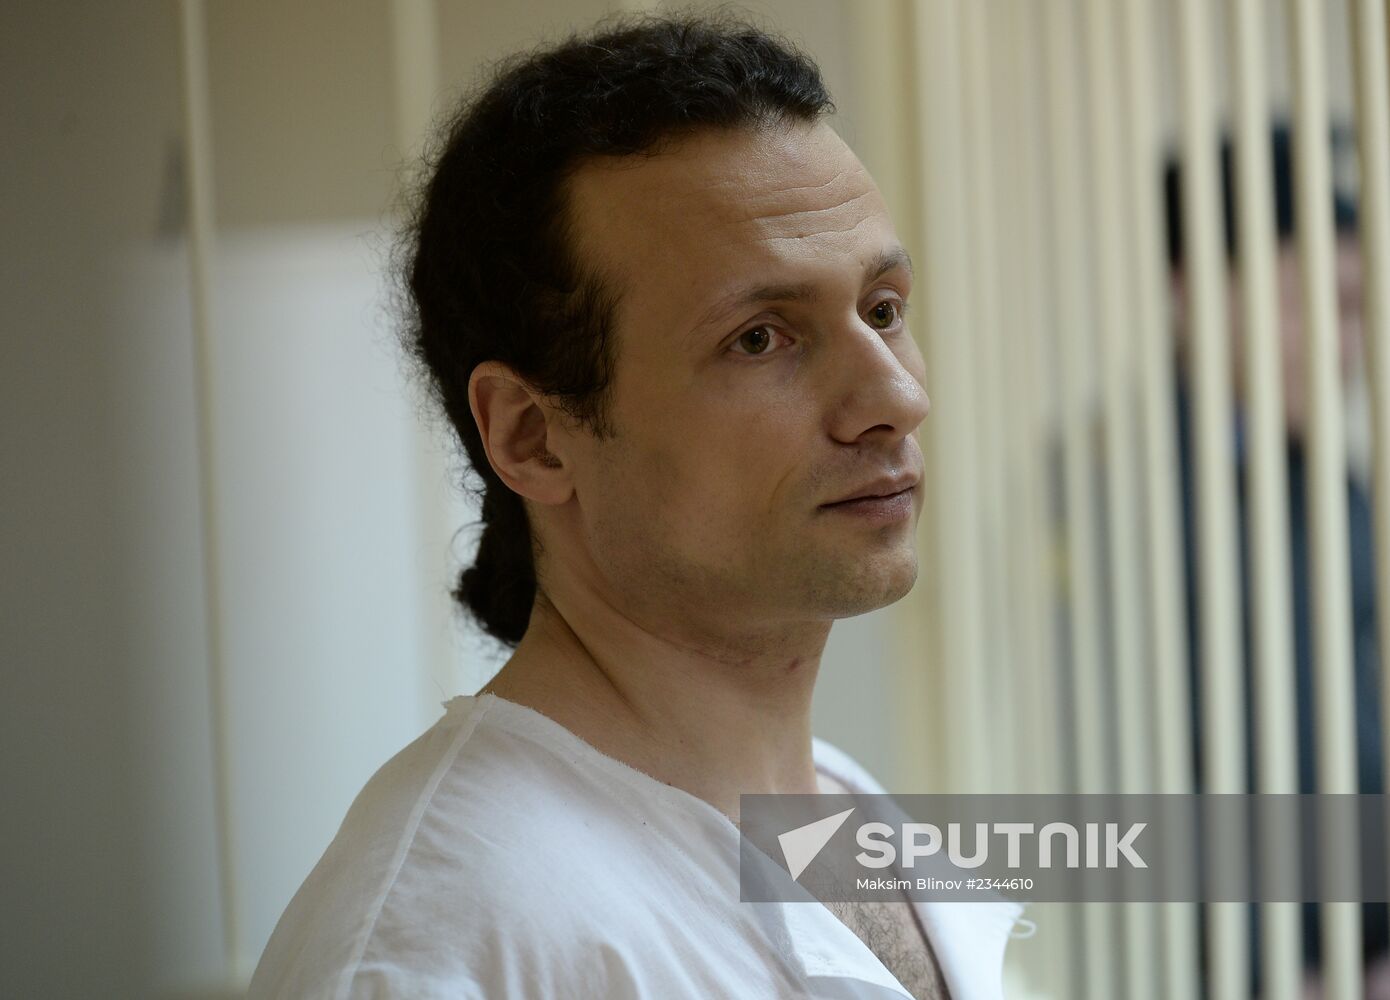 Court hearings of Ilya Farber case